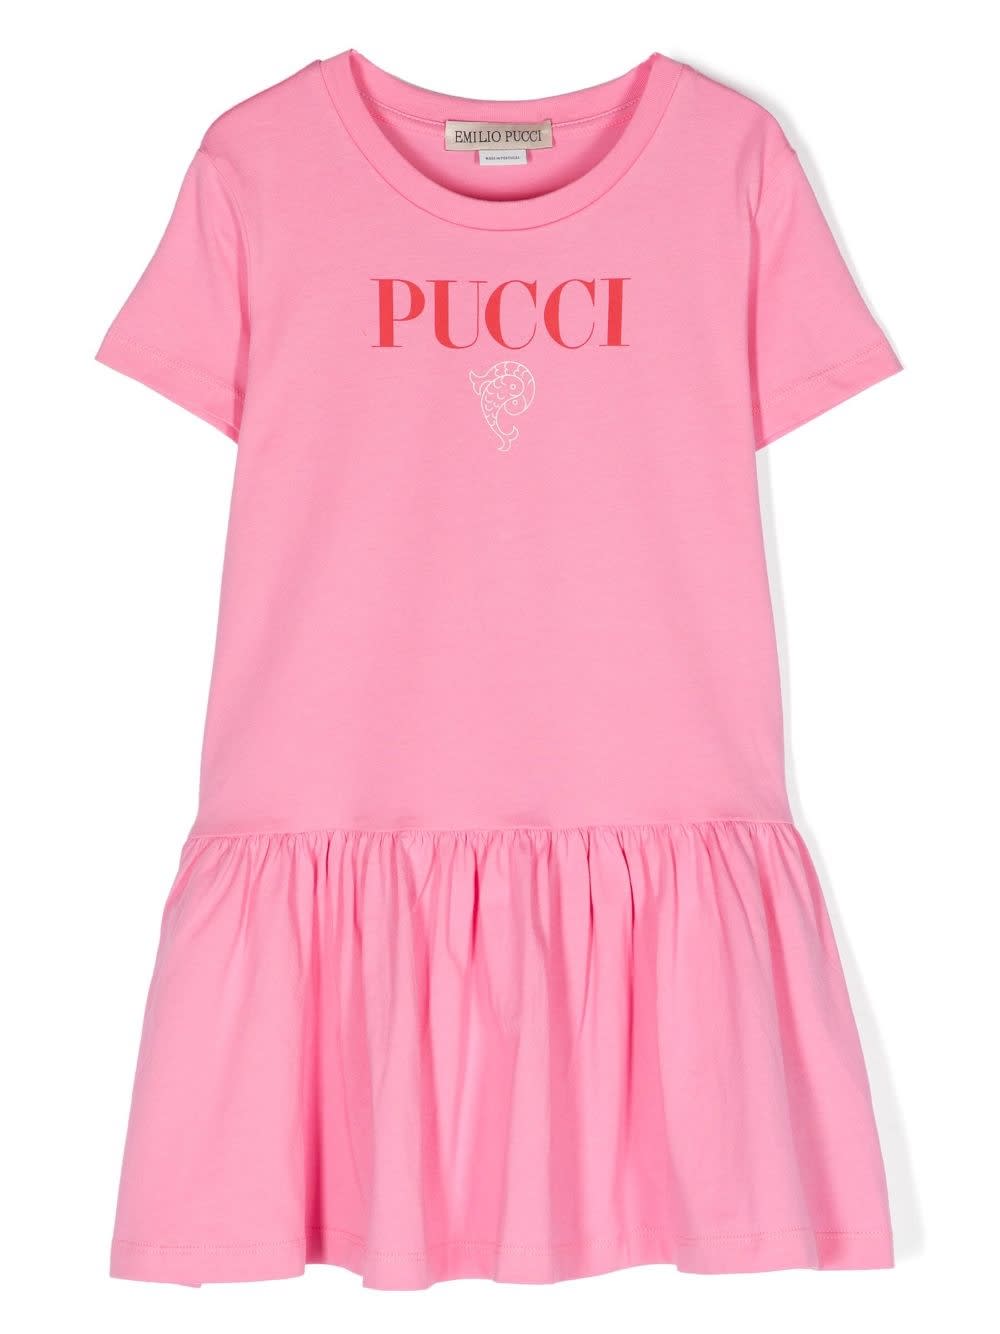 Emilio Pucci Kids' T-shirt Model Dress In Pink